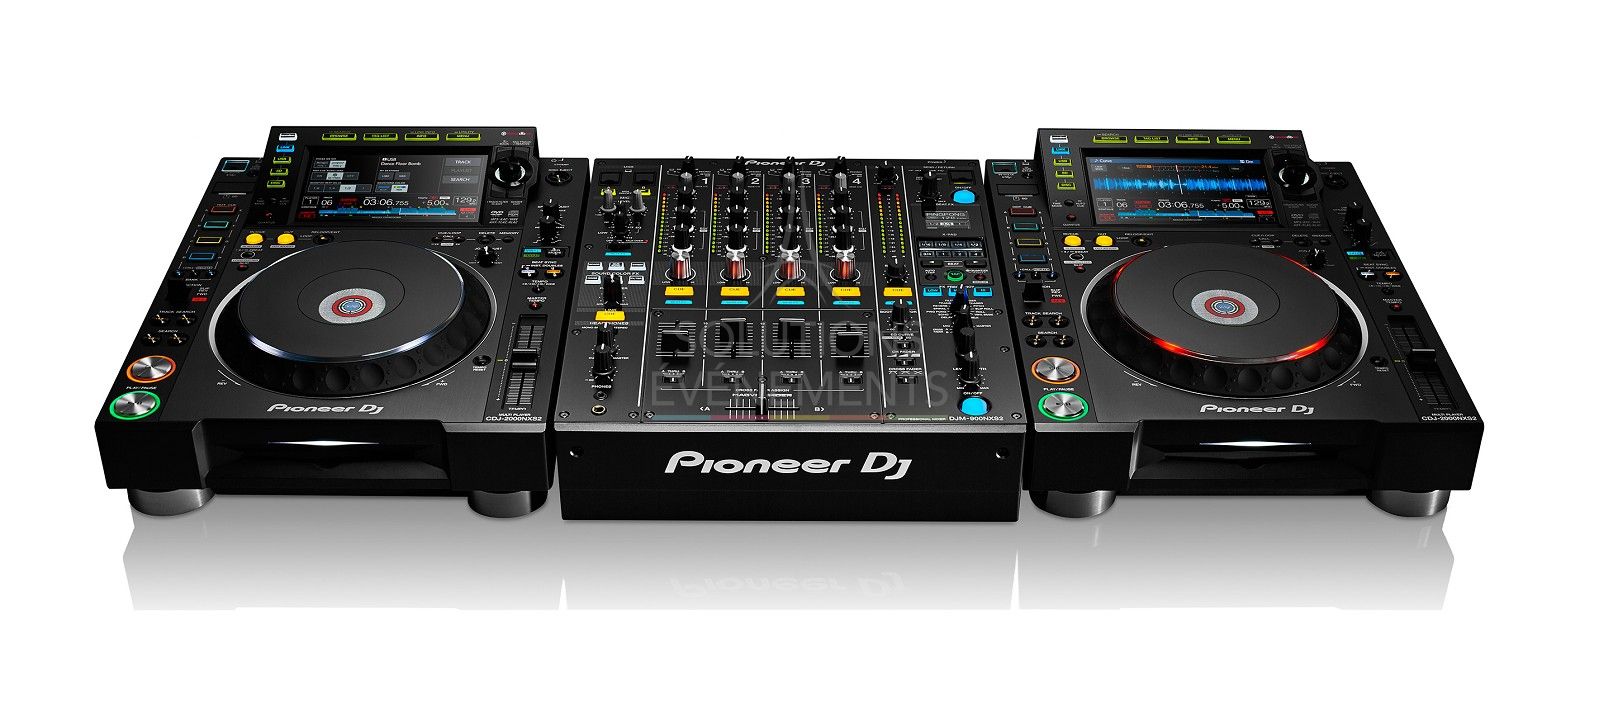 Rental of a CDJ2000 Nexus 2 and DJM900 Nexus 2 Pioneer DJ control room